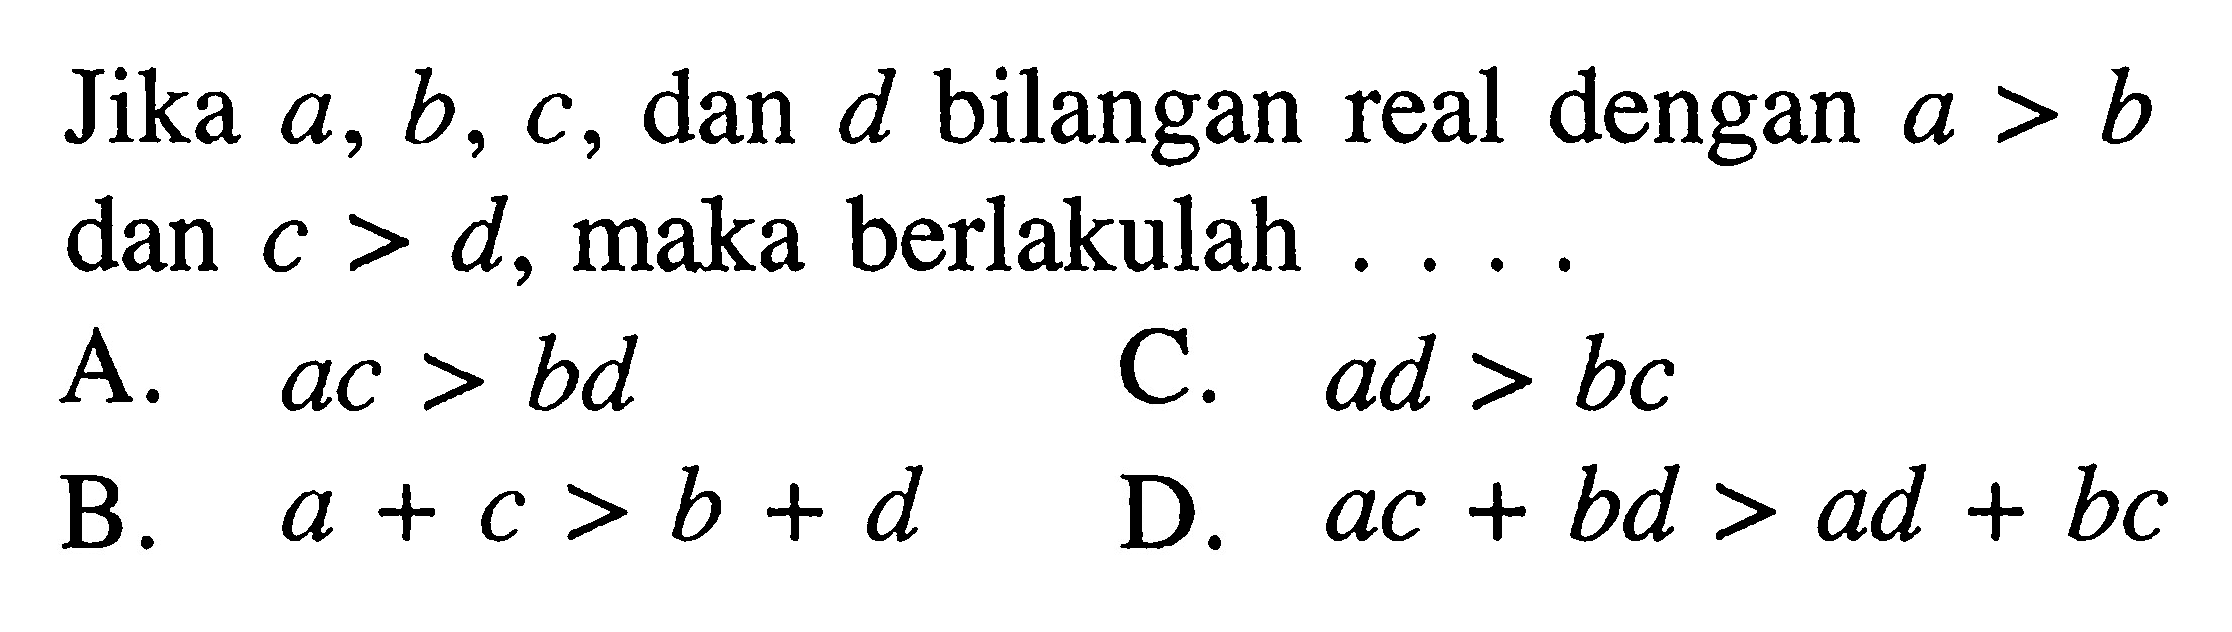 Jika a, b, c, dan d bilangan real dengan a > b dan c > d, maka berlakulah A. ac > bd B. a + c > b + d C. ad > bc D. ac + bd > ad + bc